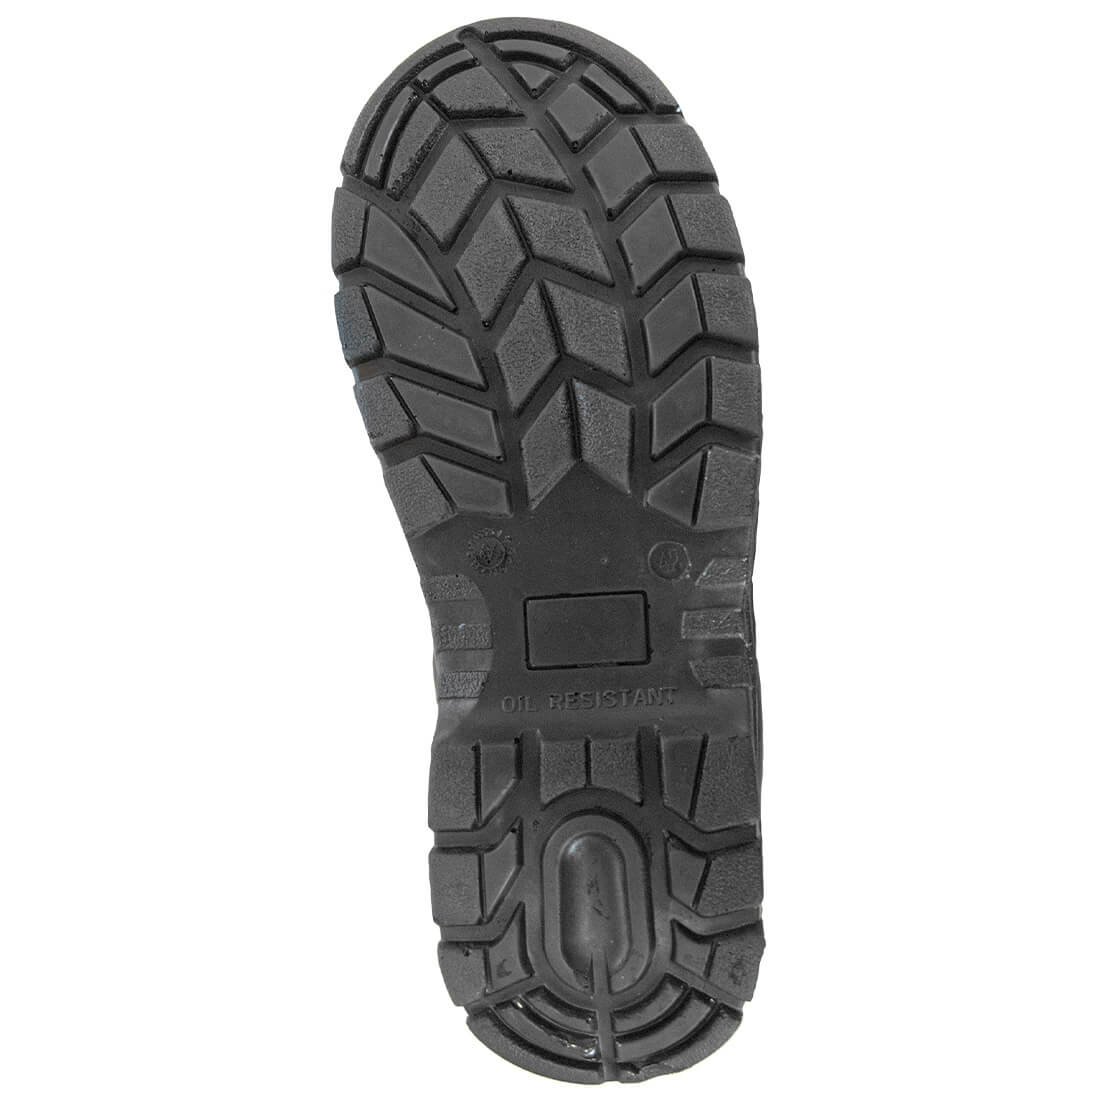 Compositelite Fur Lined Thor Boot S3 CI - Footwear